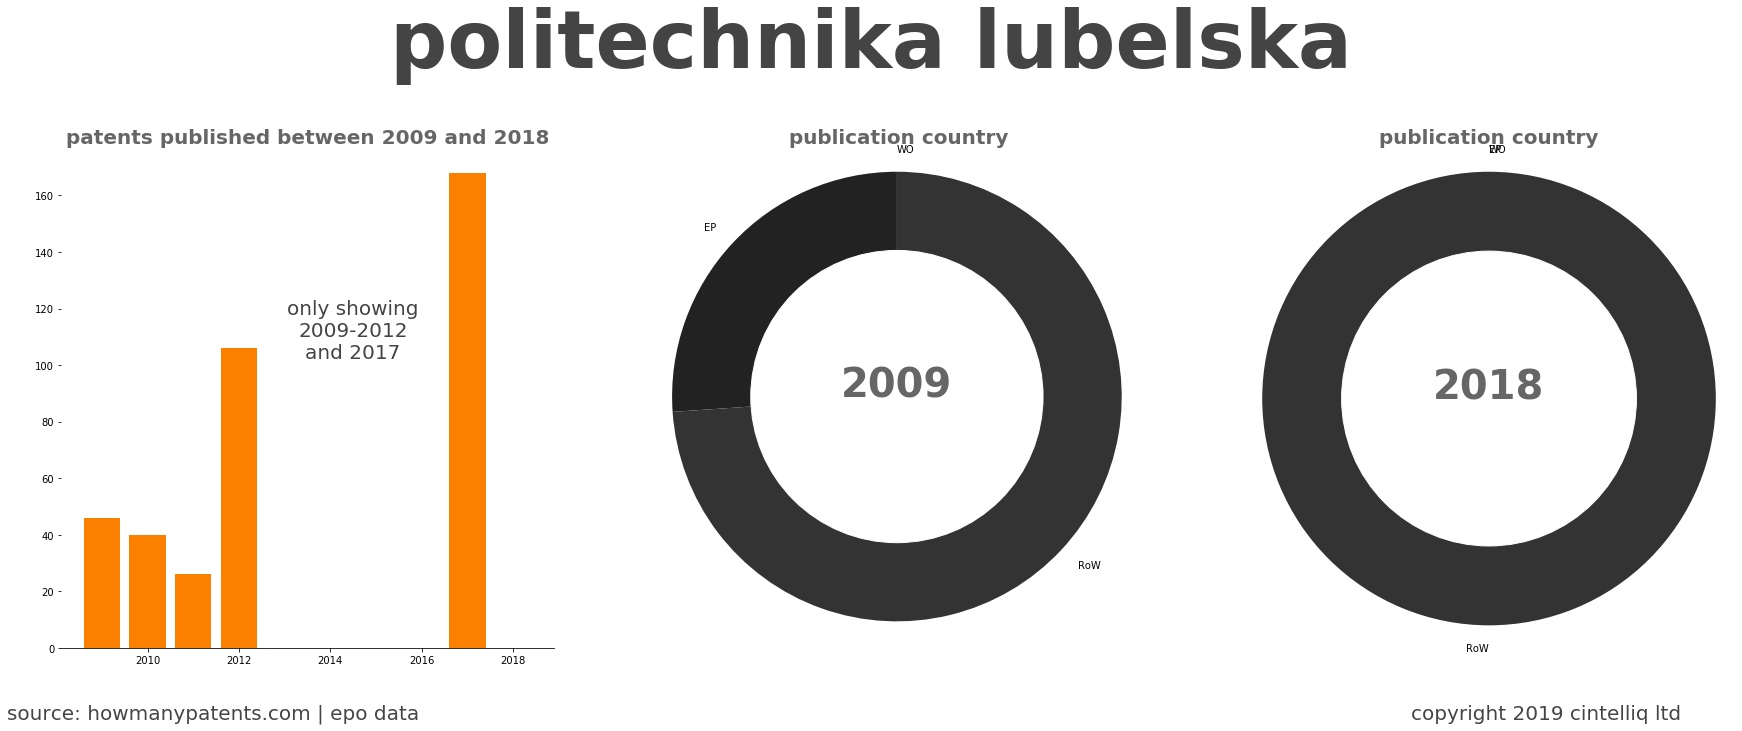 summary of patents for Politechnika Lubelska